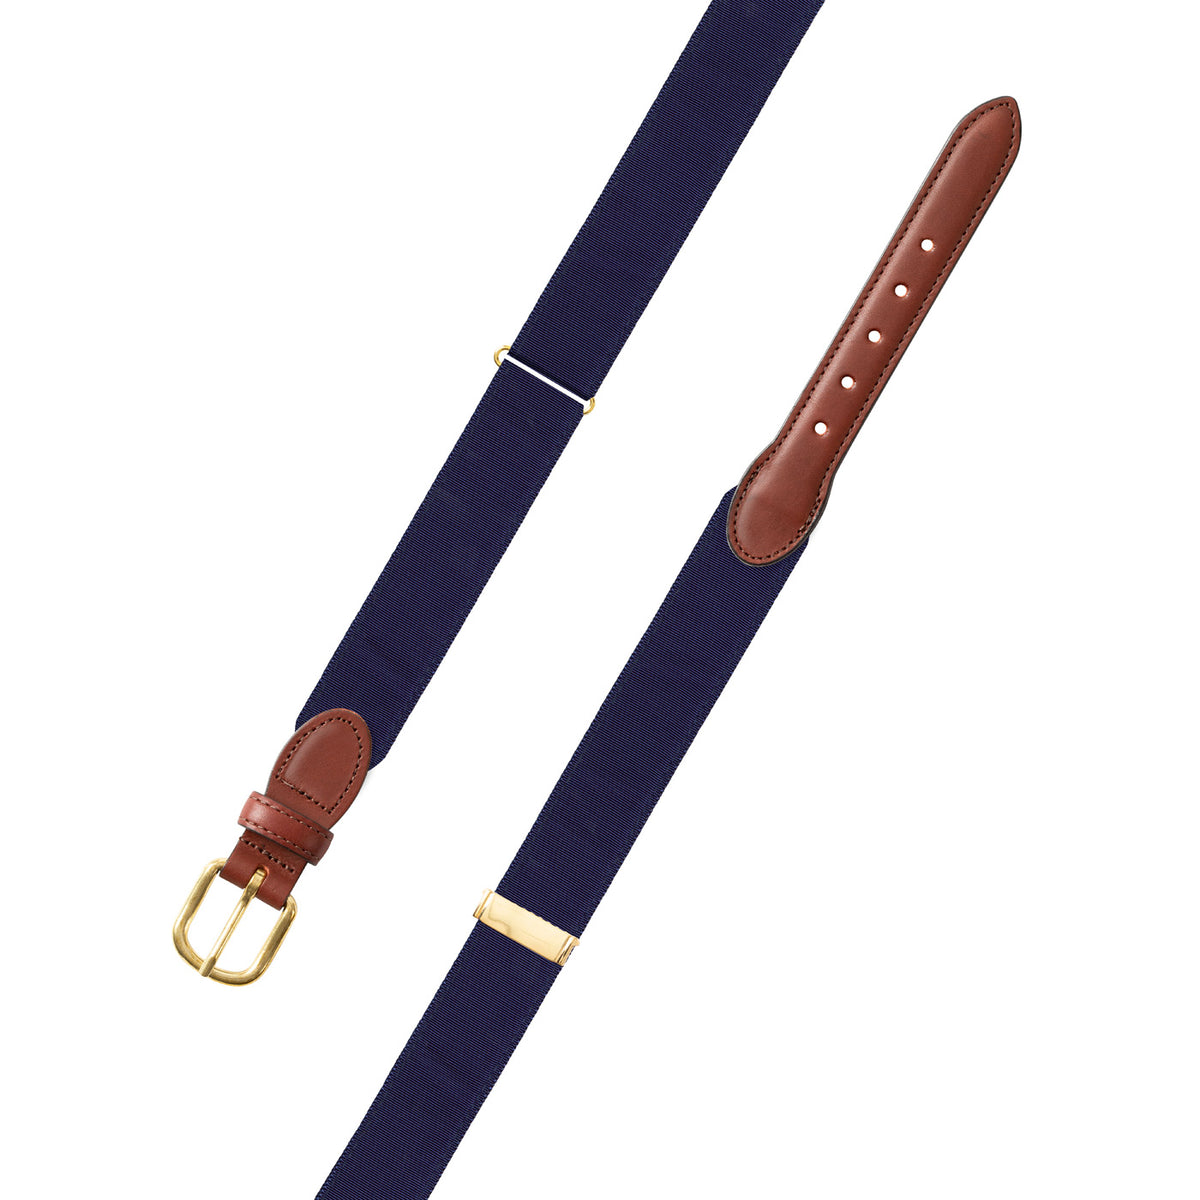 Adjustable Navy Grosgrain Belt with Brown Leather Tabs